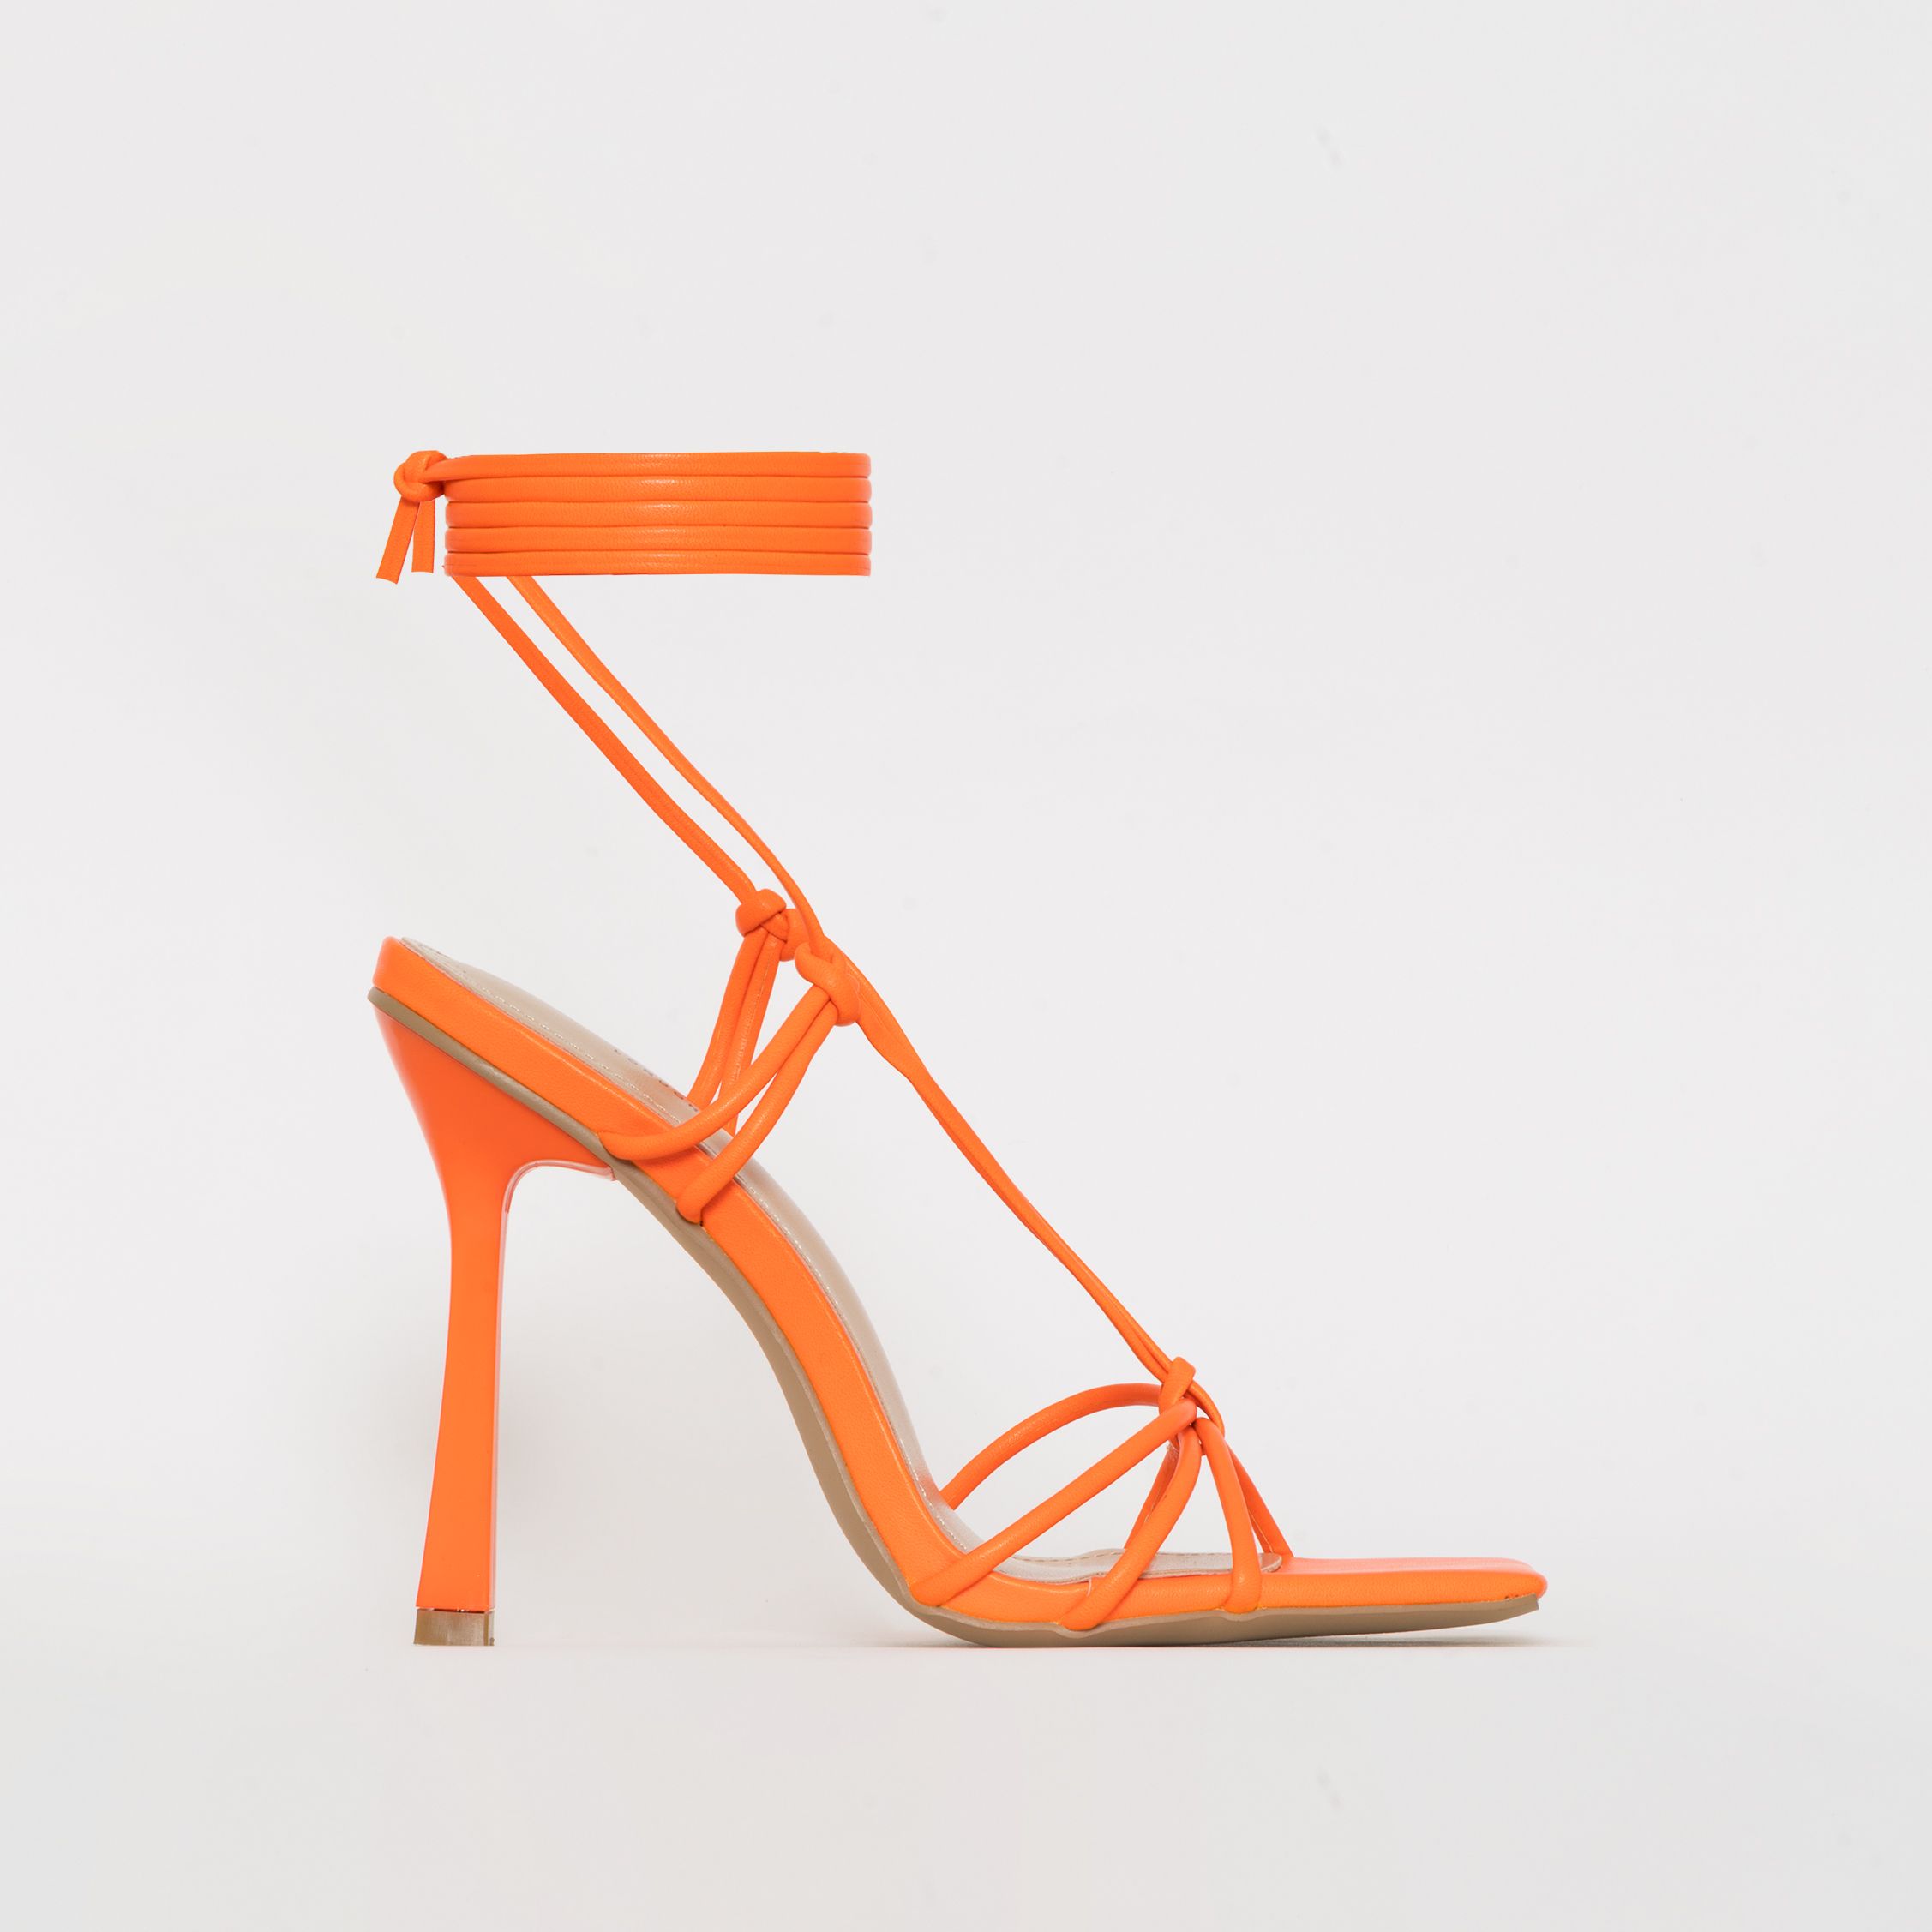 Buy > square front heels > in stock